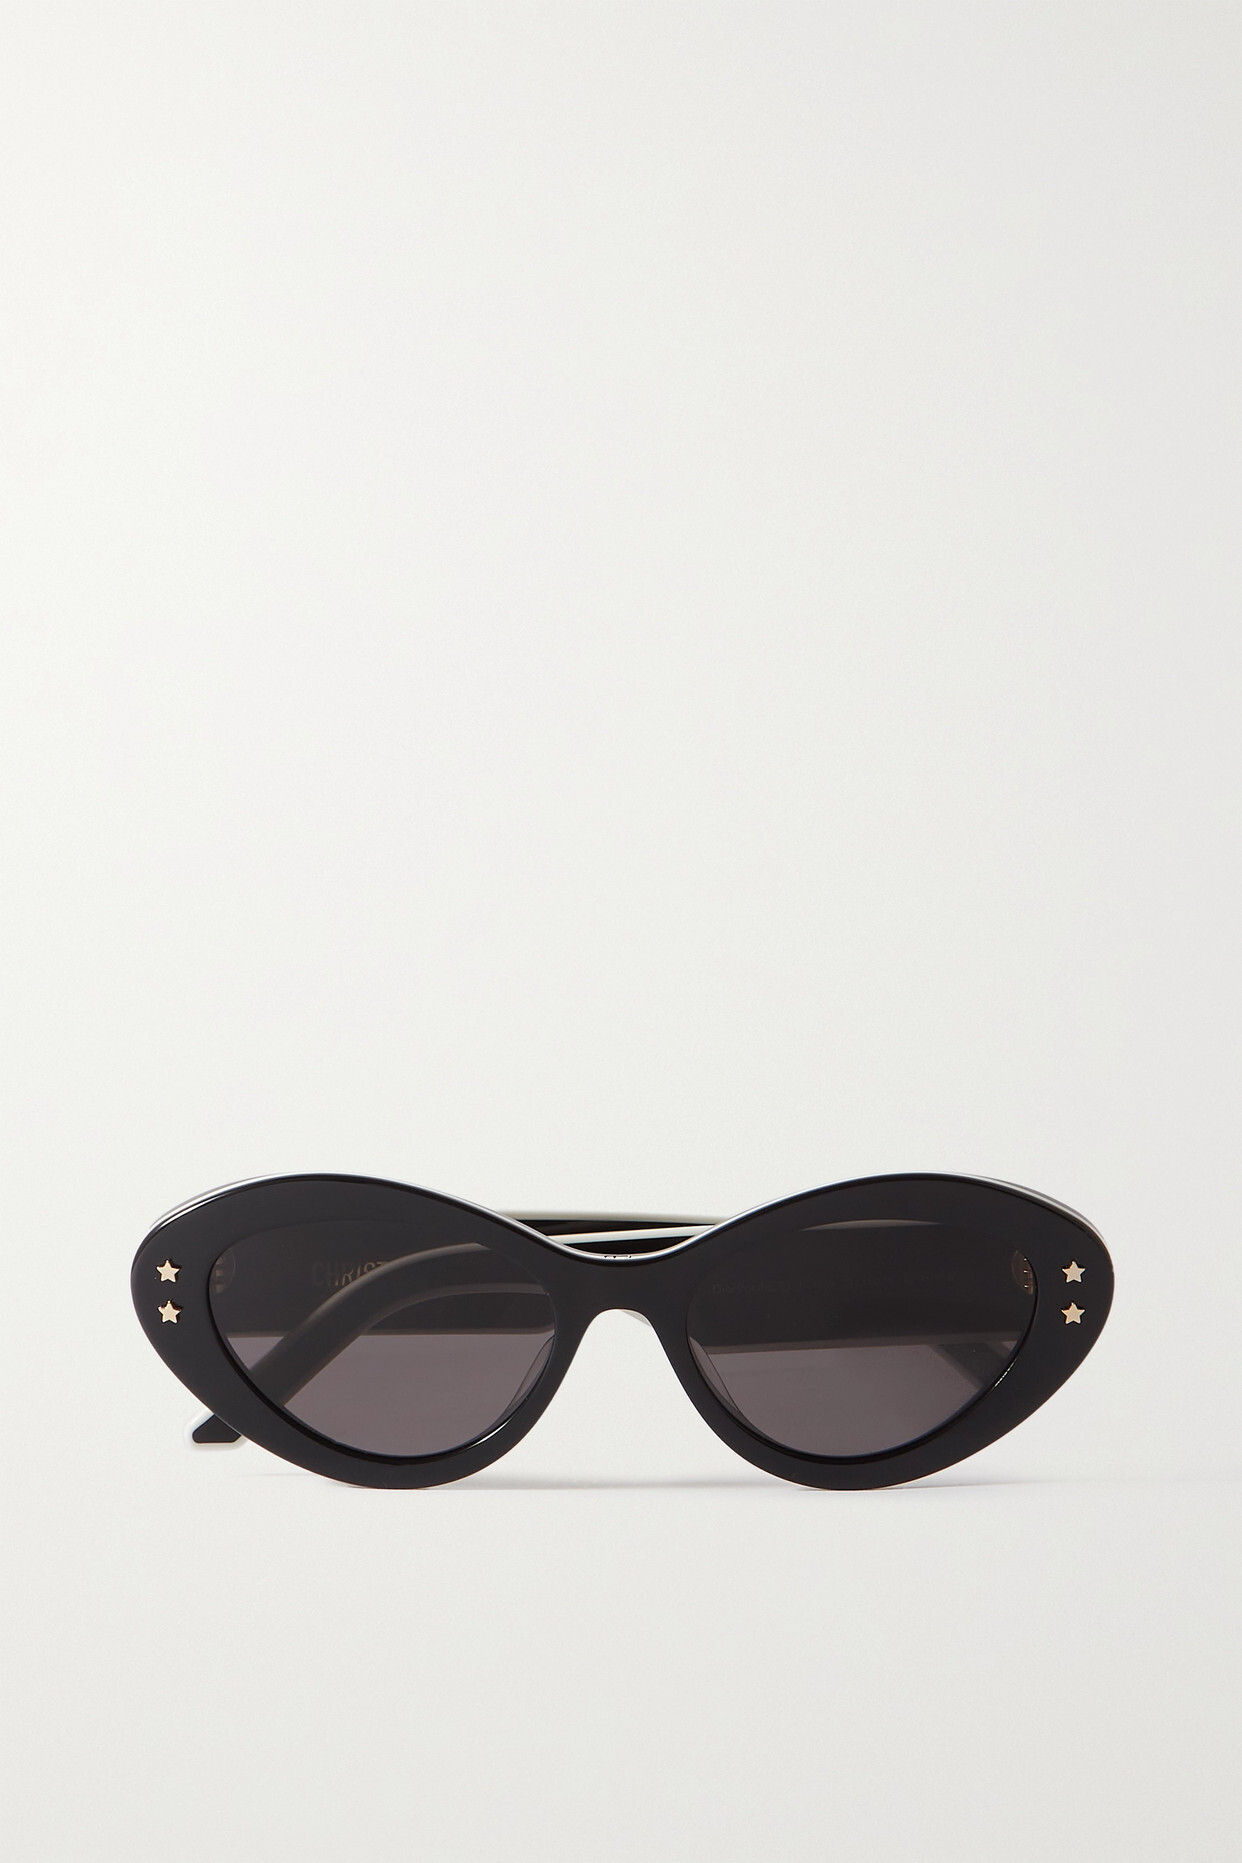 DIOR Eyewear - Diorpacific B1u Cat-eye Acetate Sunglasses - Black